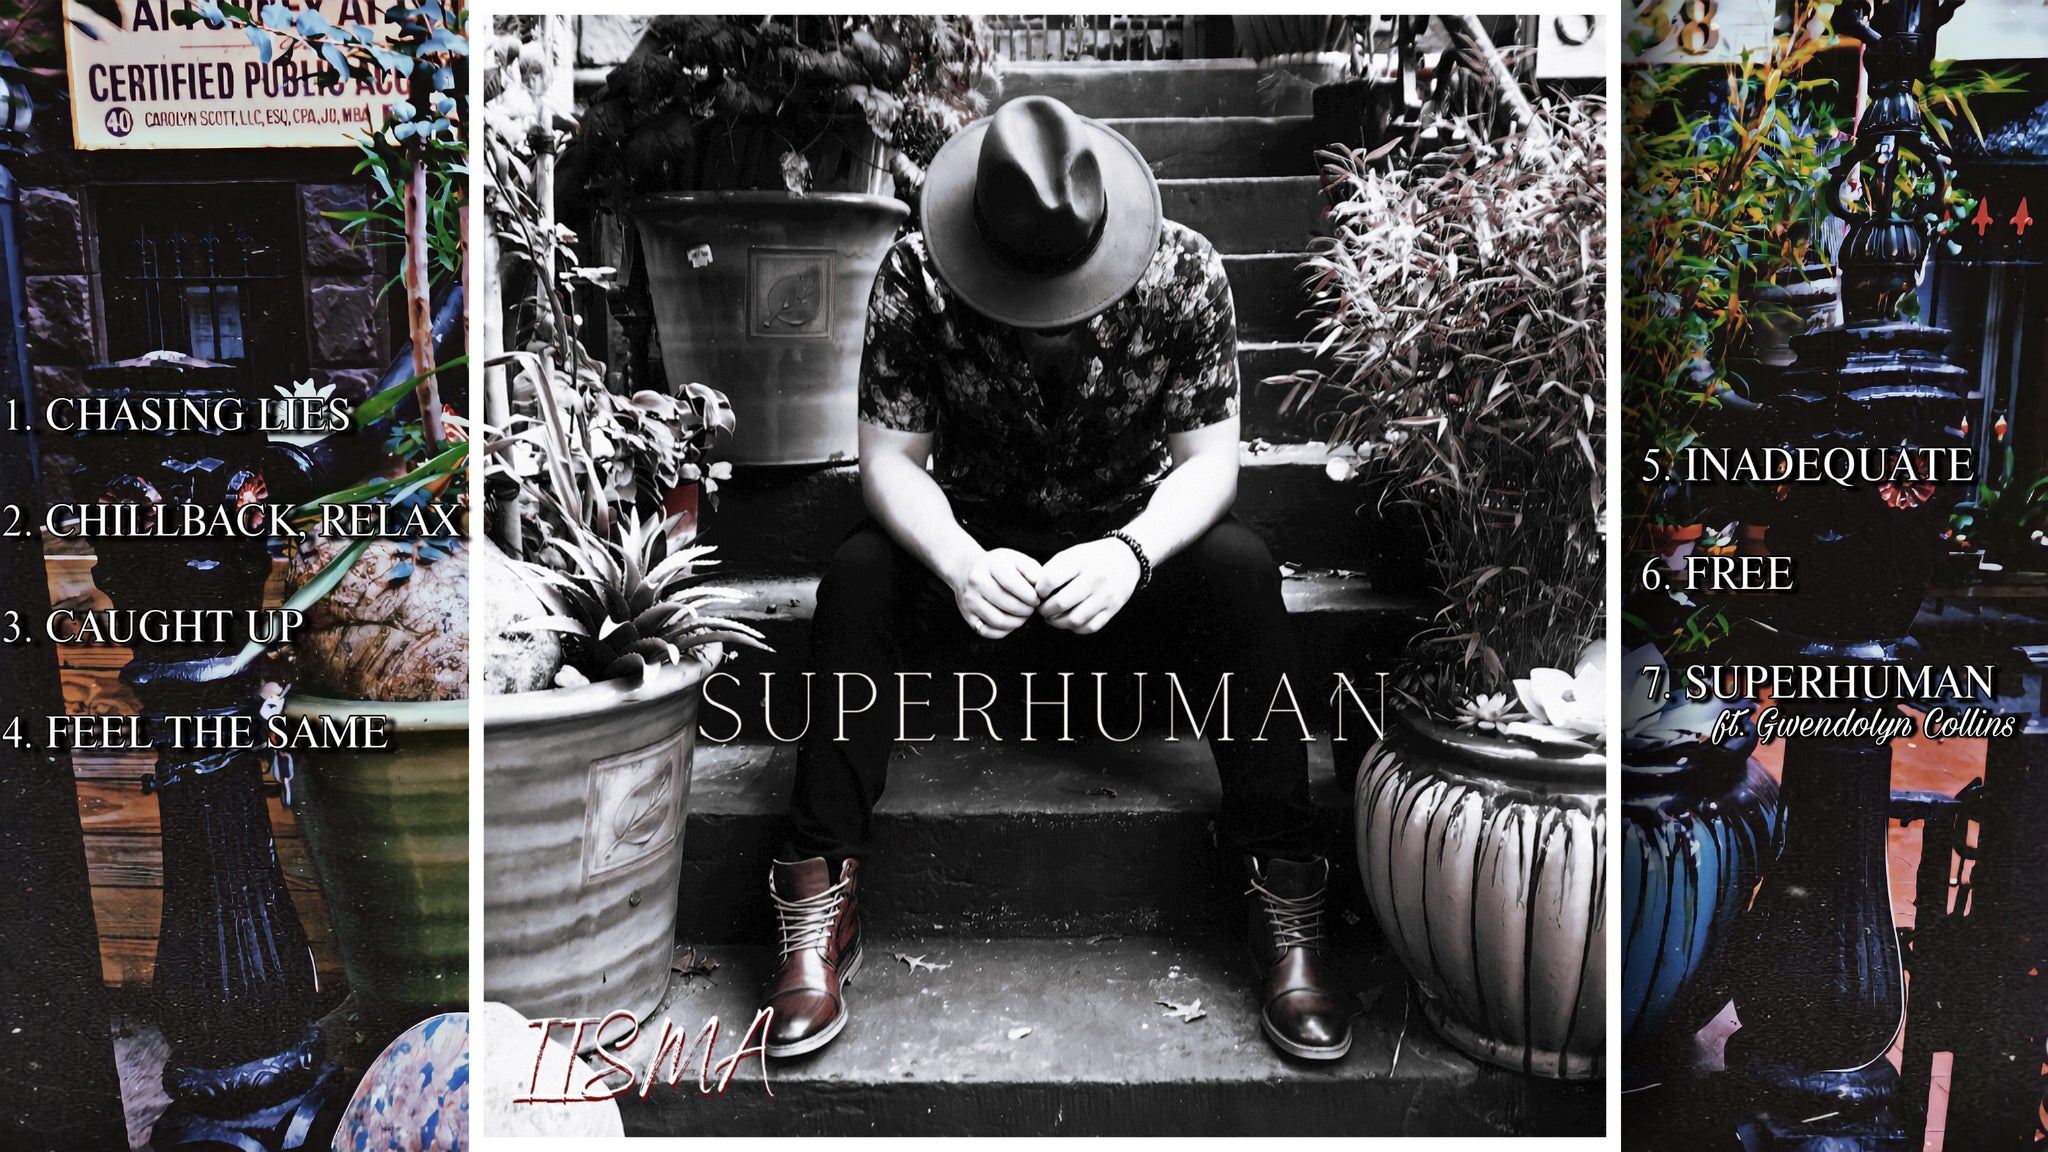 IISMA- Superhuman (Album Review)